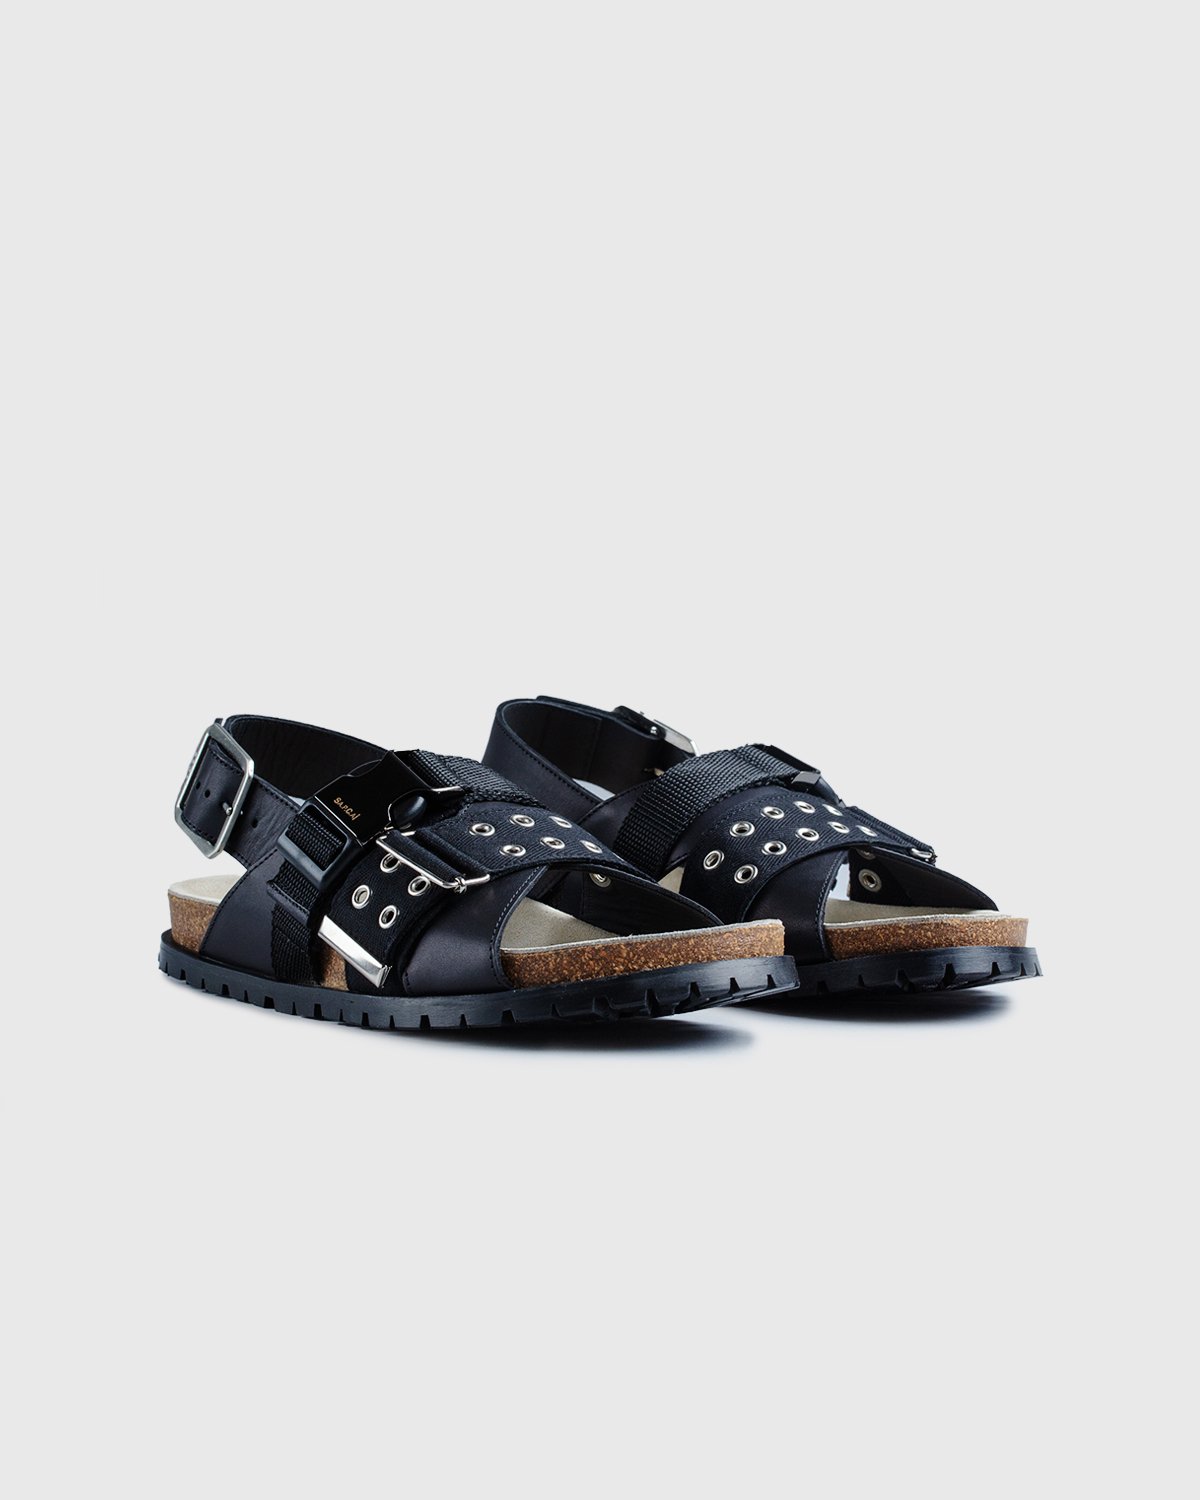 A.P.C. x Sacai - Sandals Black - Footwear - Black - Image 3